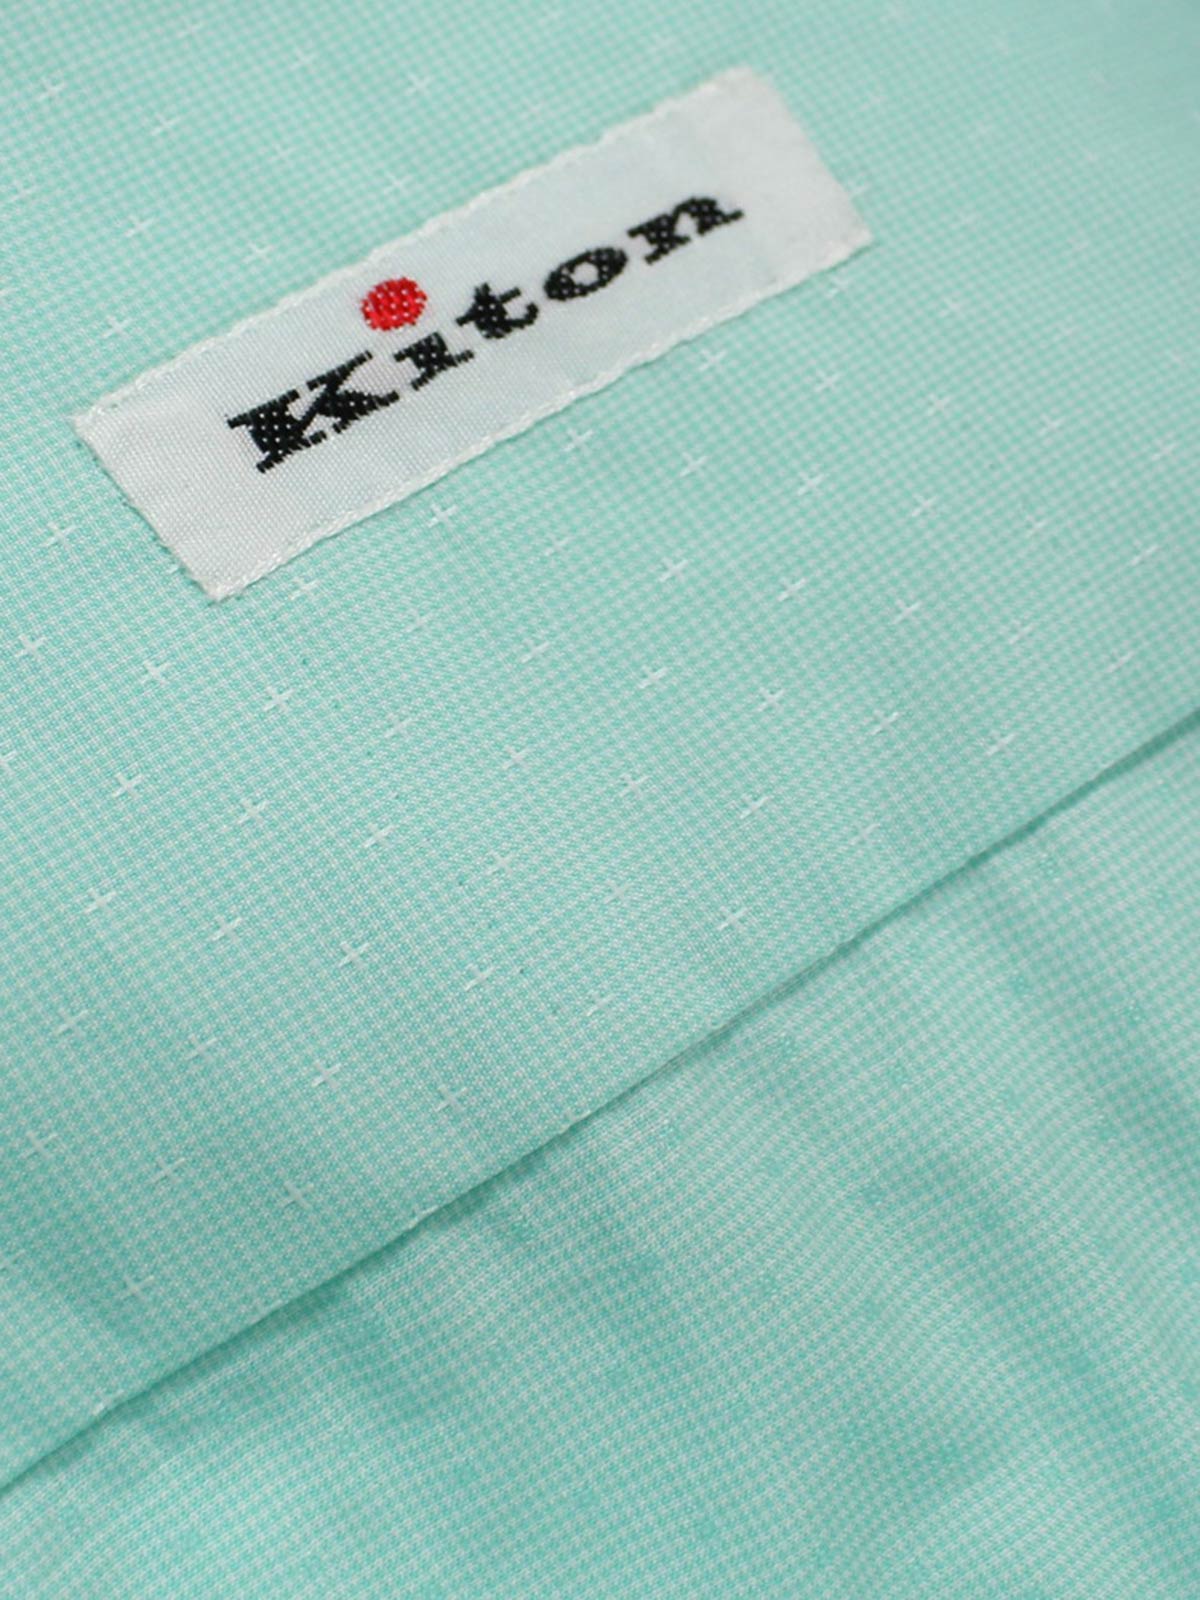 Kiton Short Sleeve Shirt Mint Green Pattern 44 - 17 1/2 REDUCED SALE